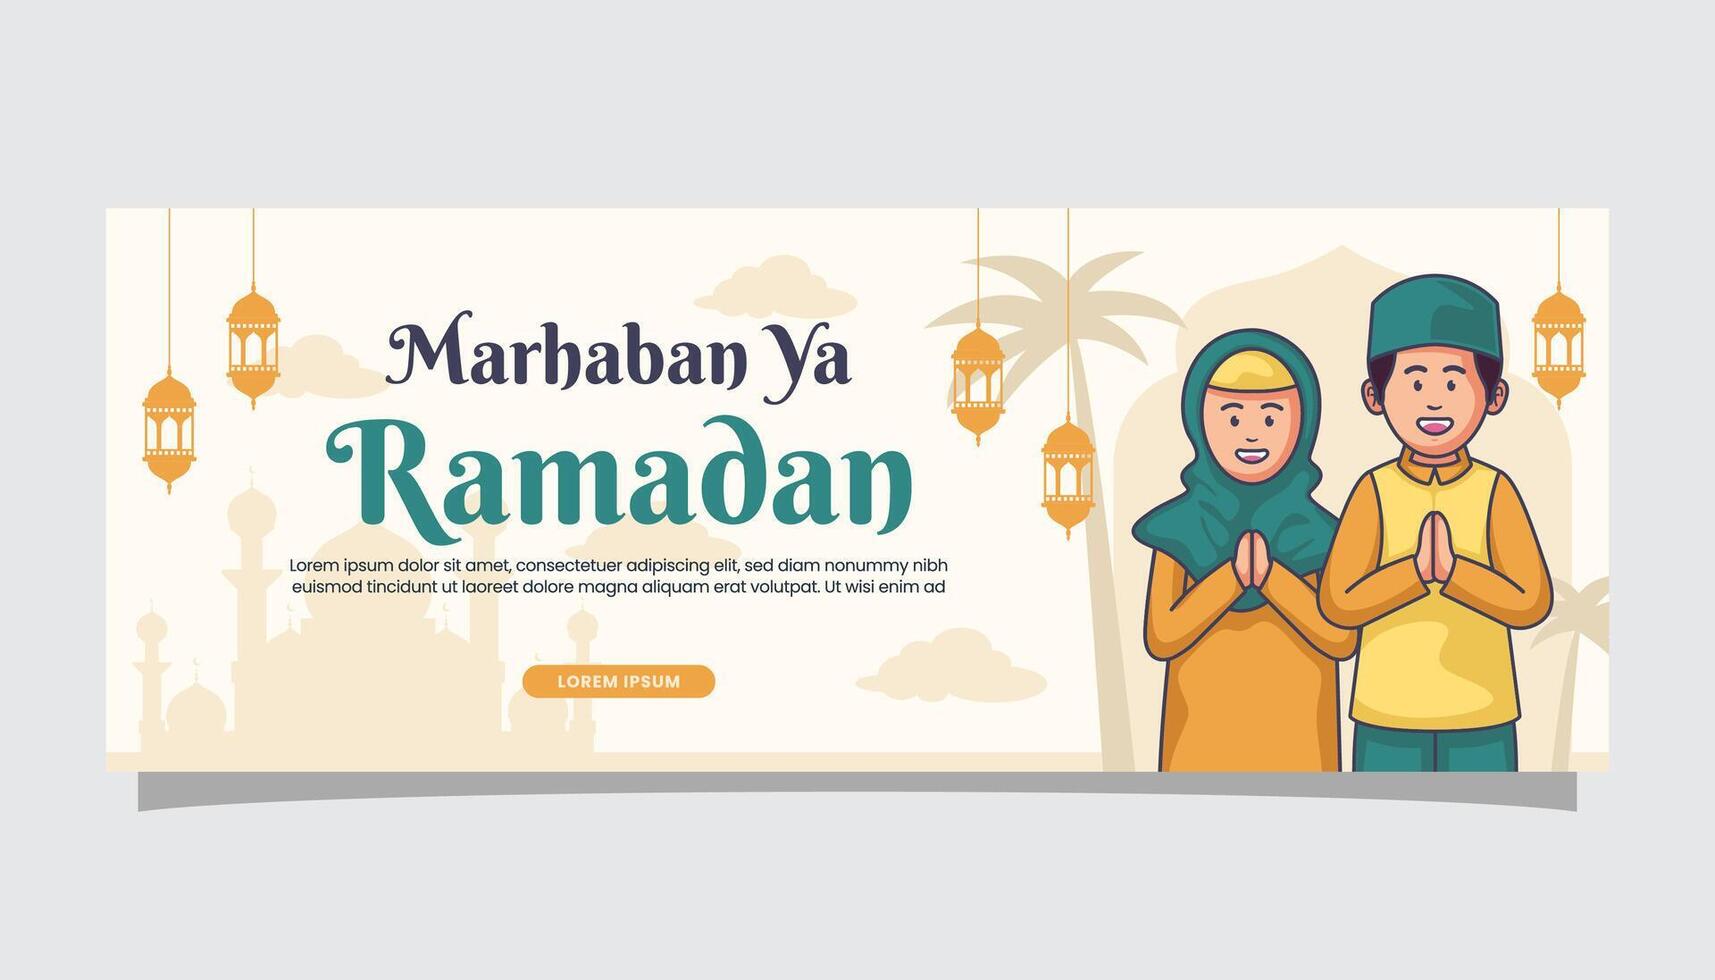 bem-vinda Ramadã kareem islâmico ilustração saudações em bandeira cobrir página vetor